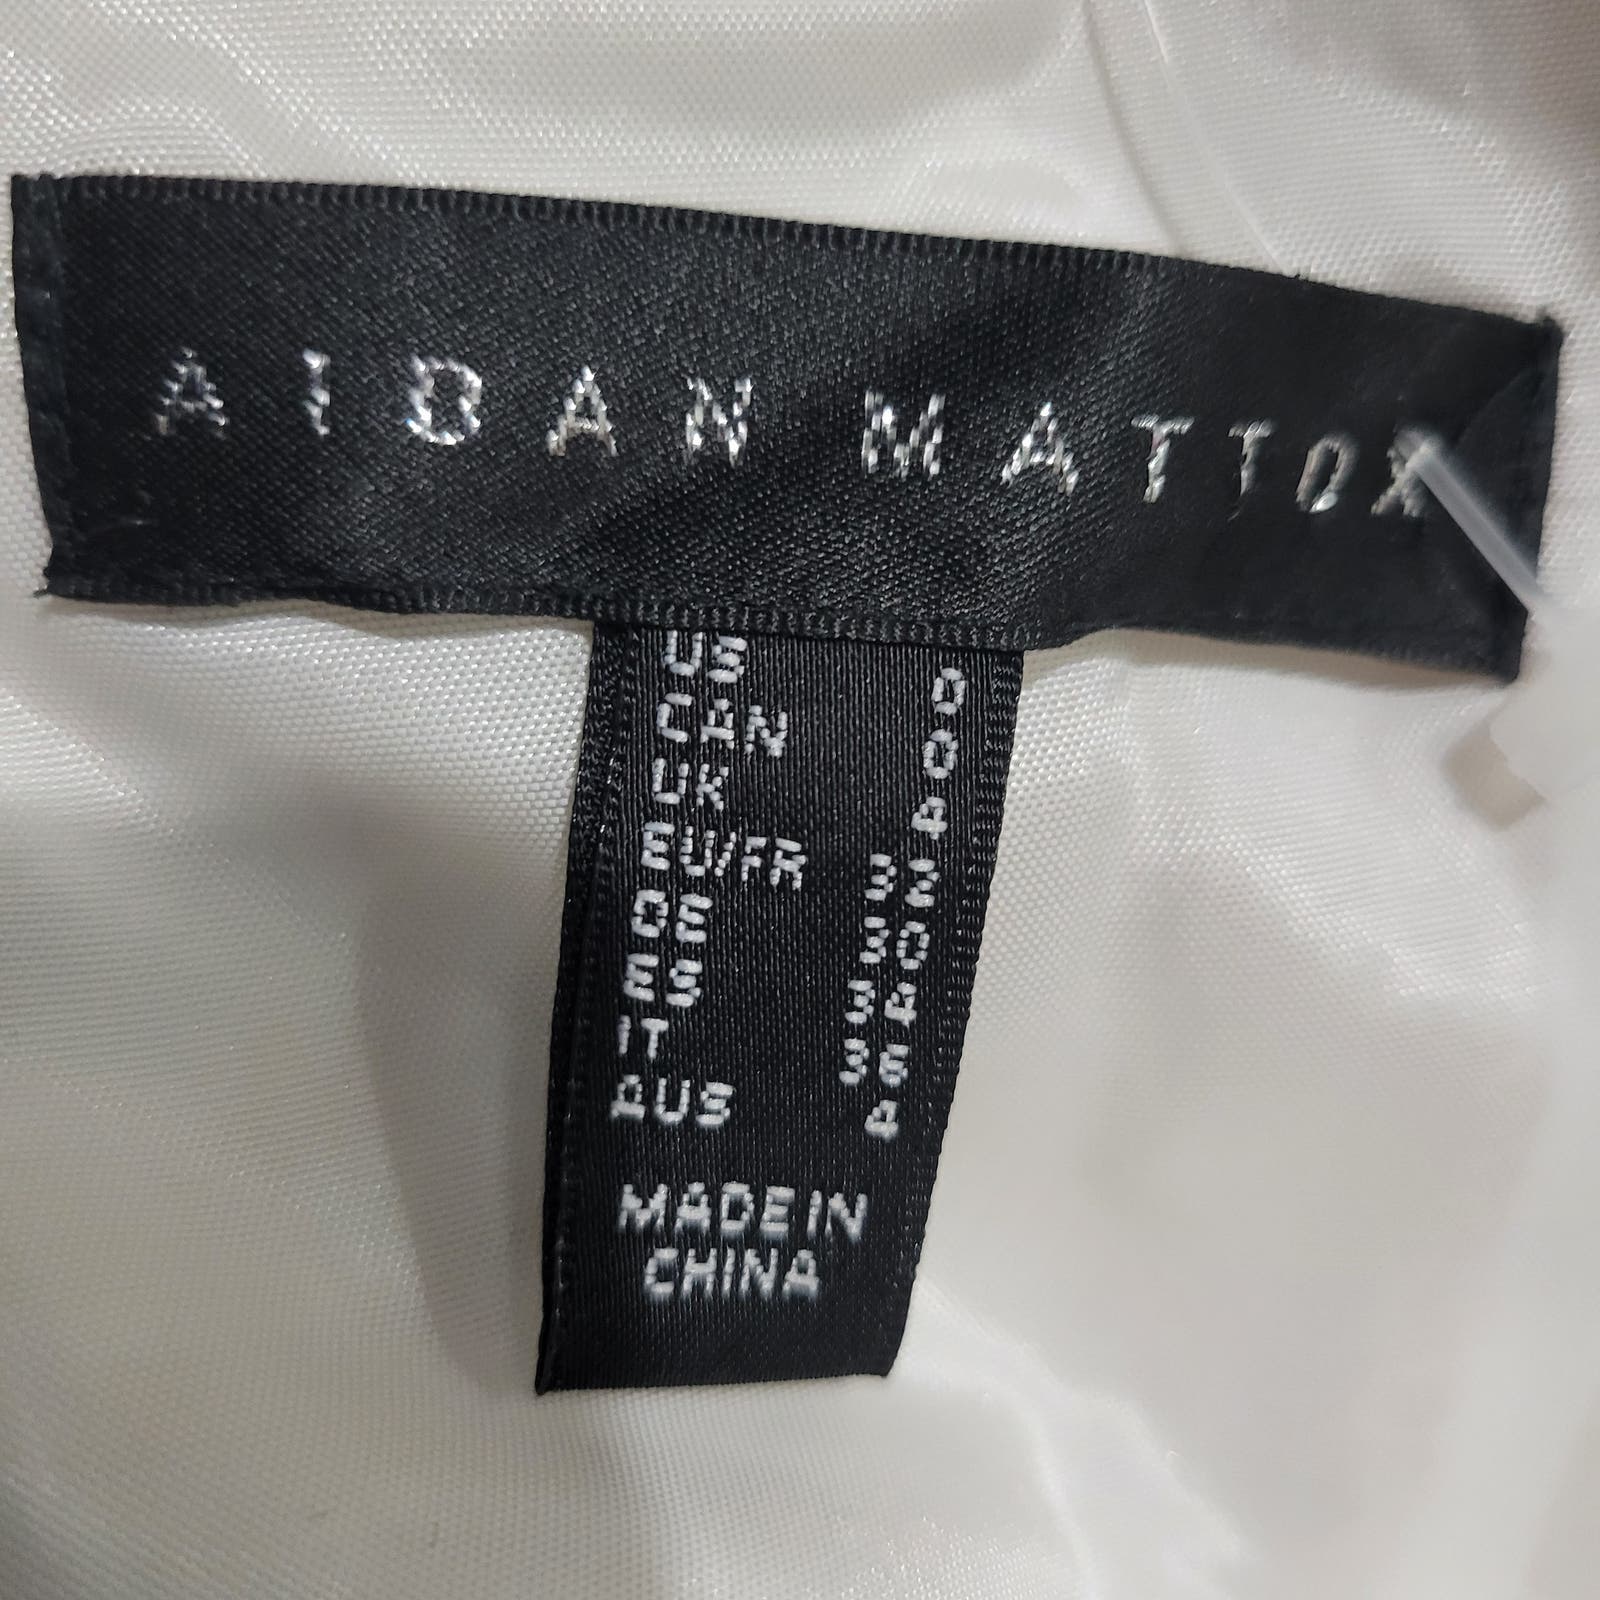 Aidan Mattox Floral Jacquard Maxi Dress Ivory Gold Metallic Deep V Neck Formal Evening Size 0